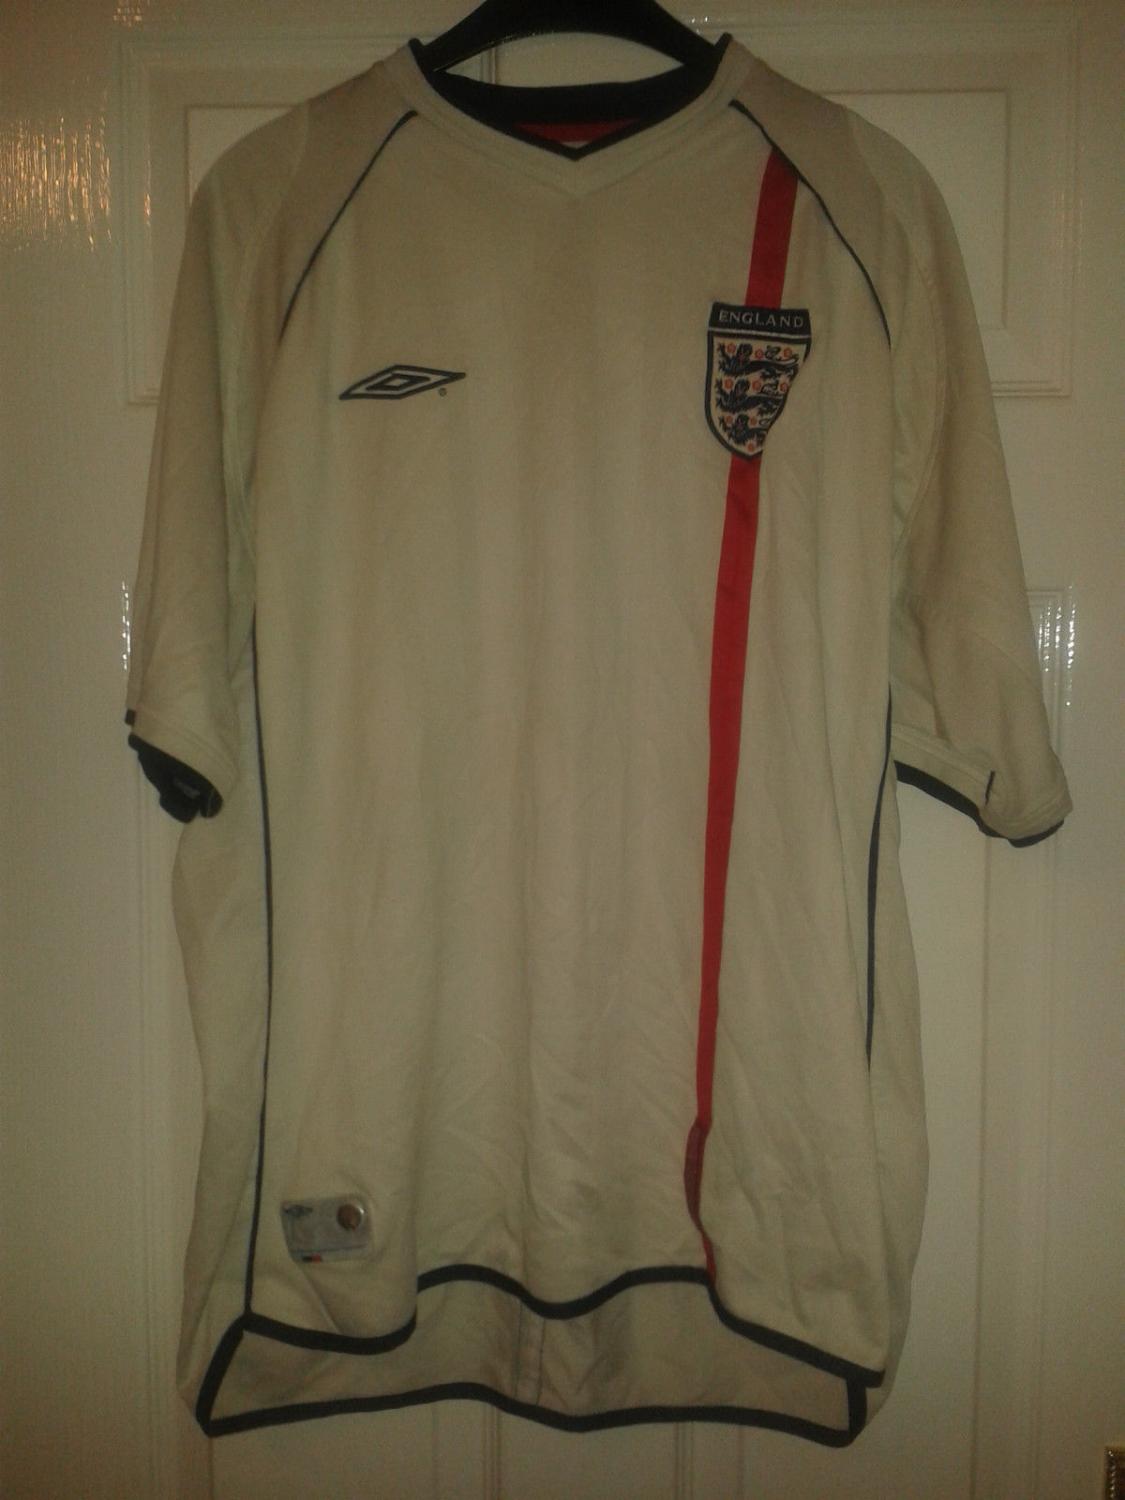 England Home football shirt 2001 - 2003.